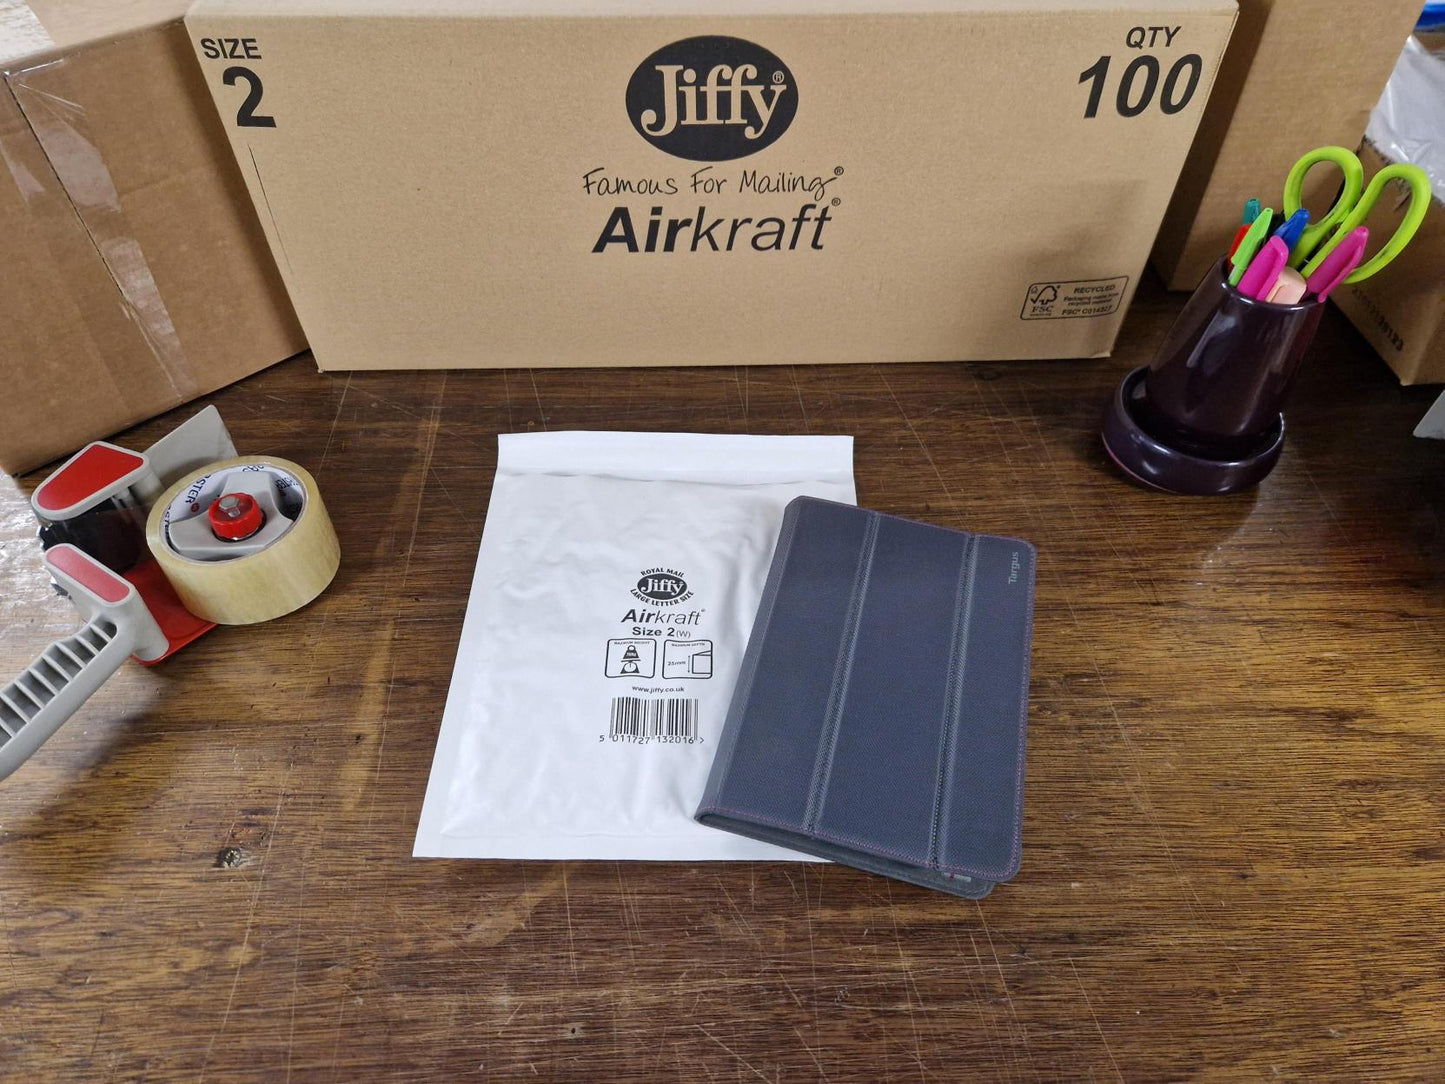 Box of Jiffy Airkraft JL2 - 240mm x 275mm (100 envelopes)